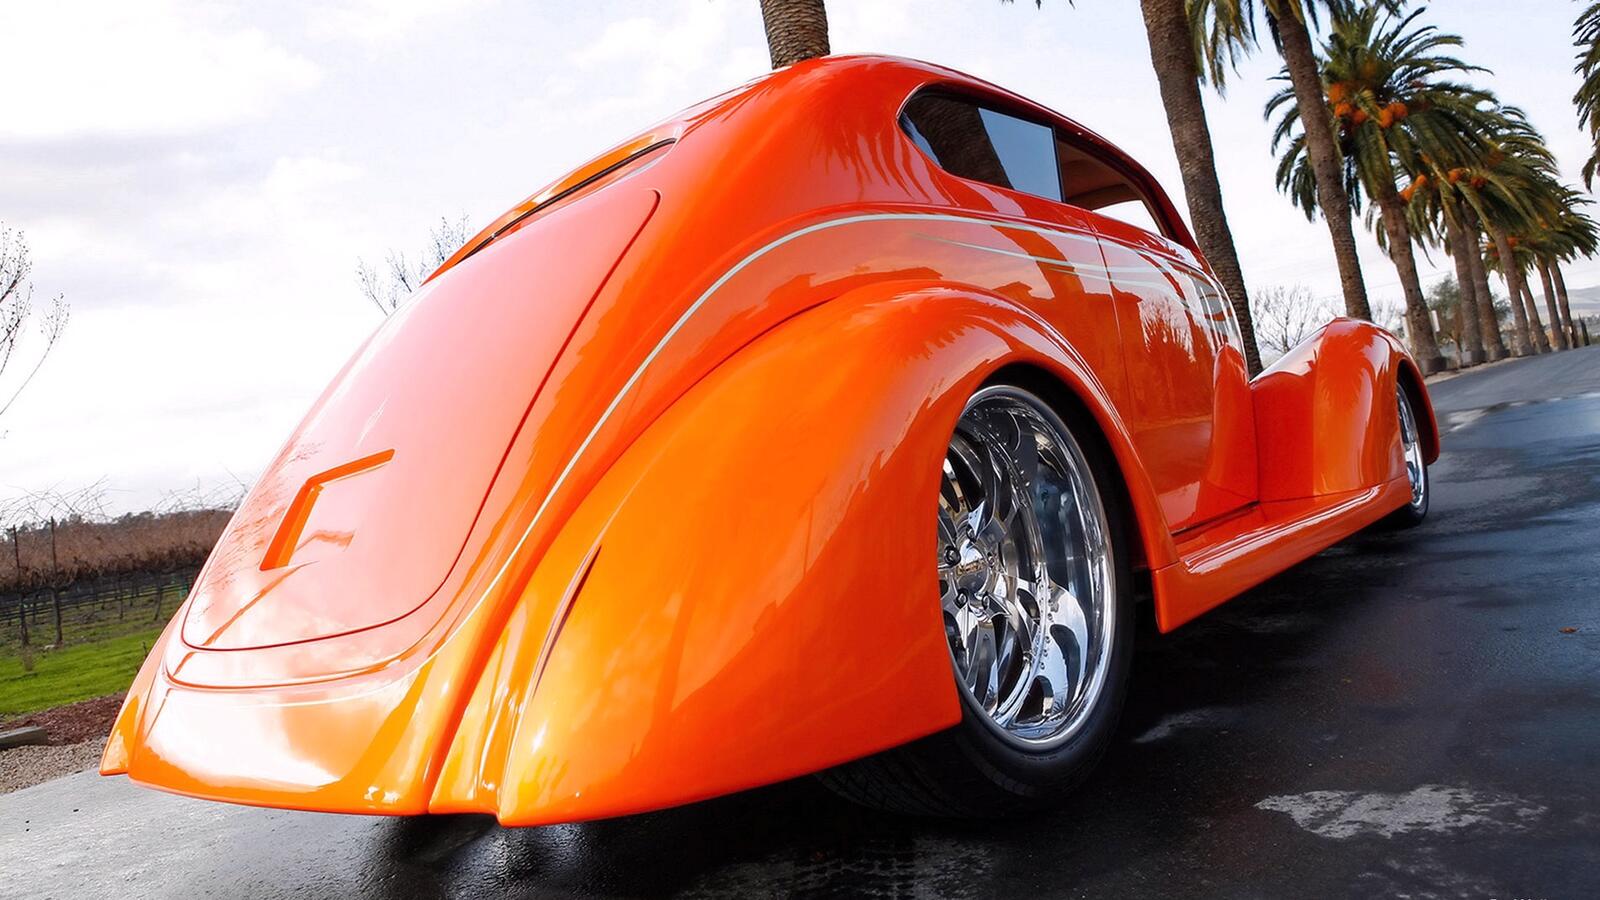 Free photo Orange Beetle car